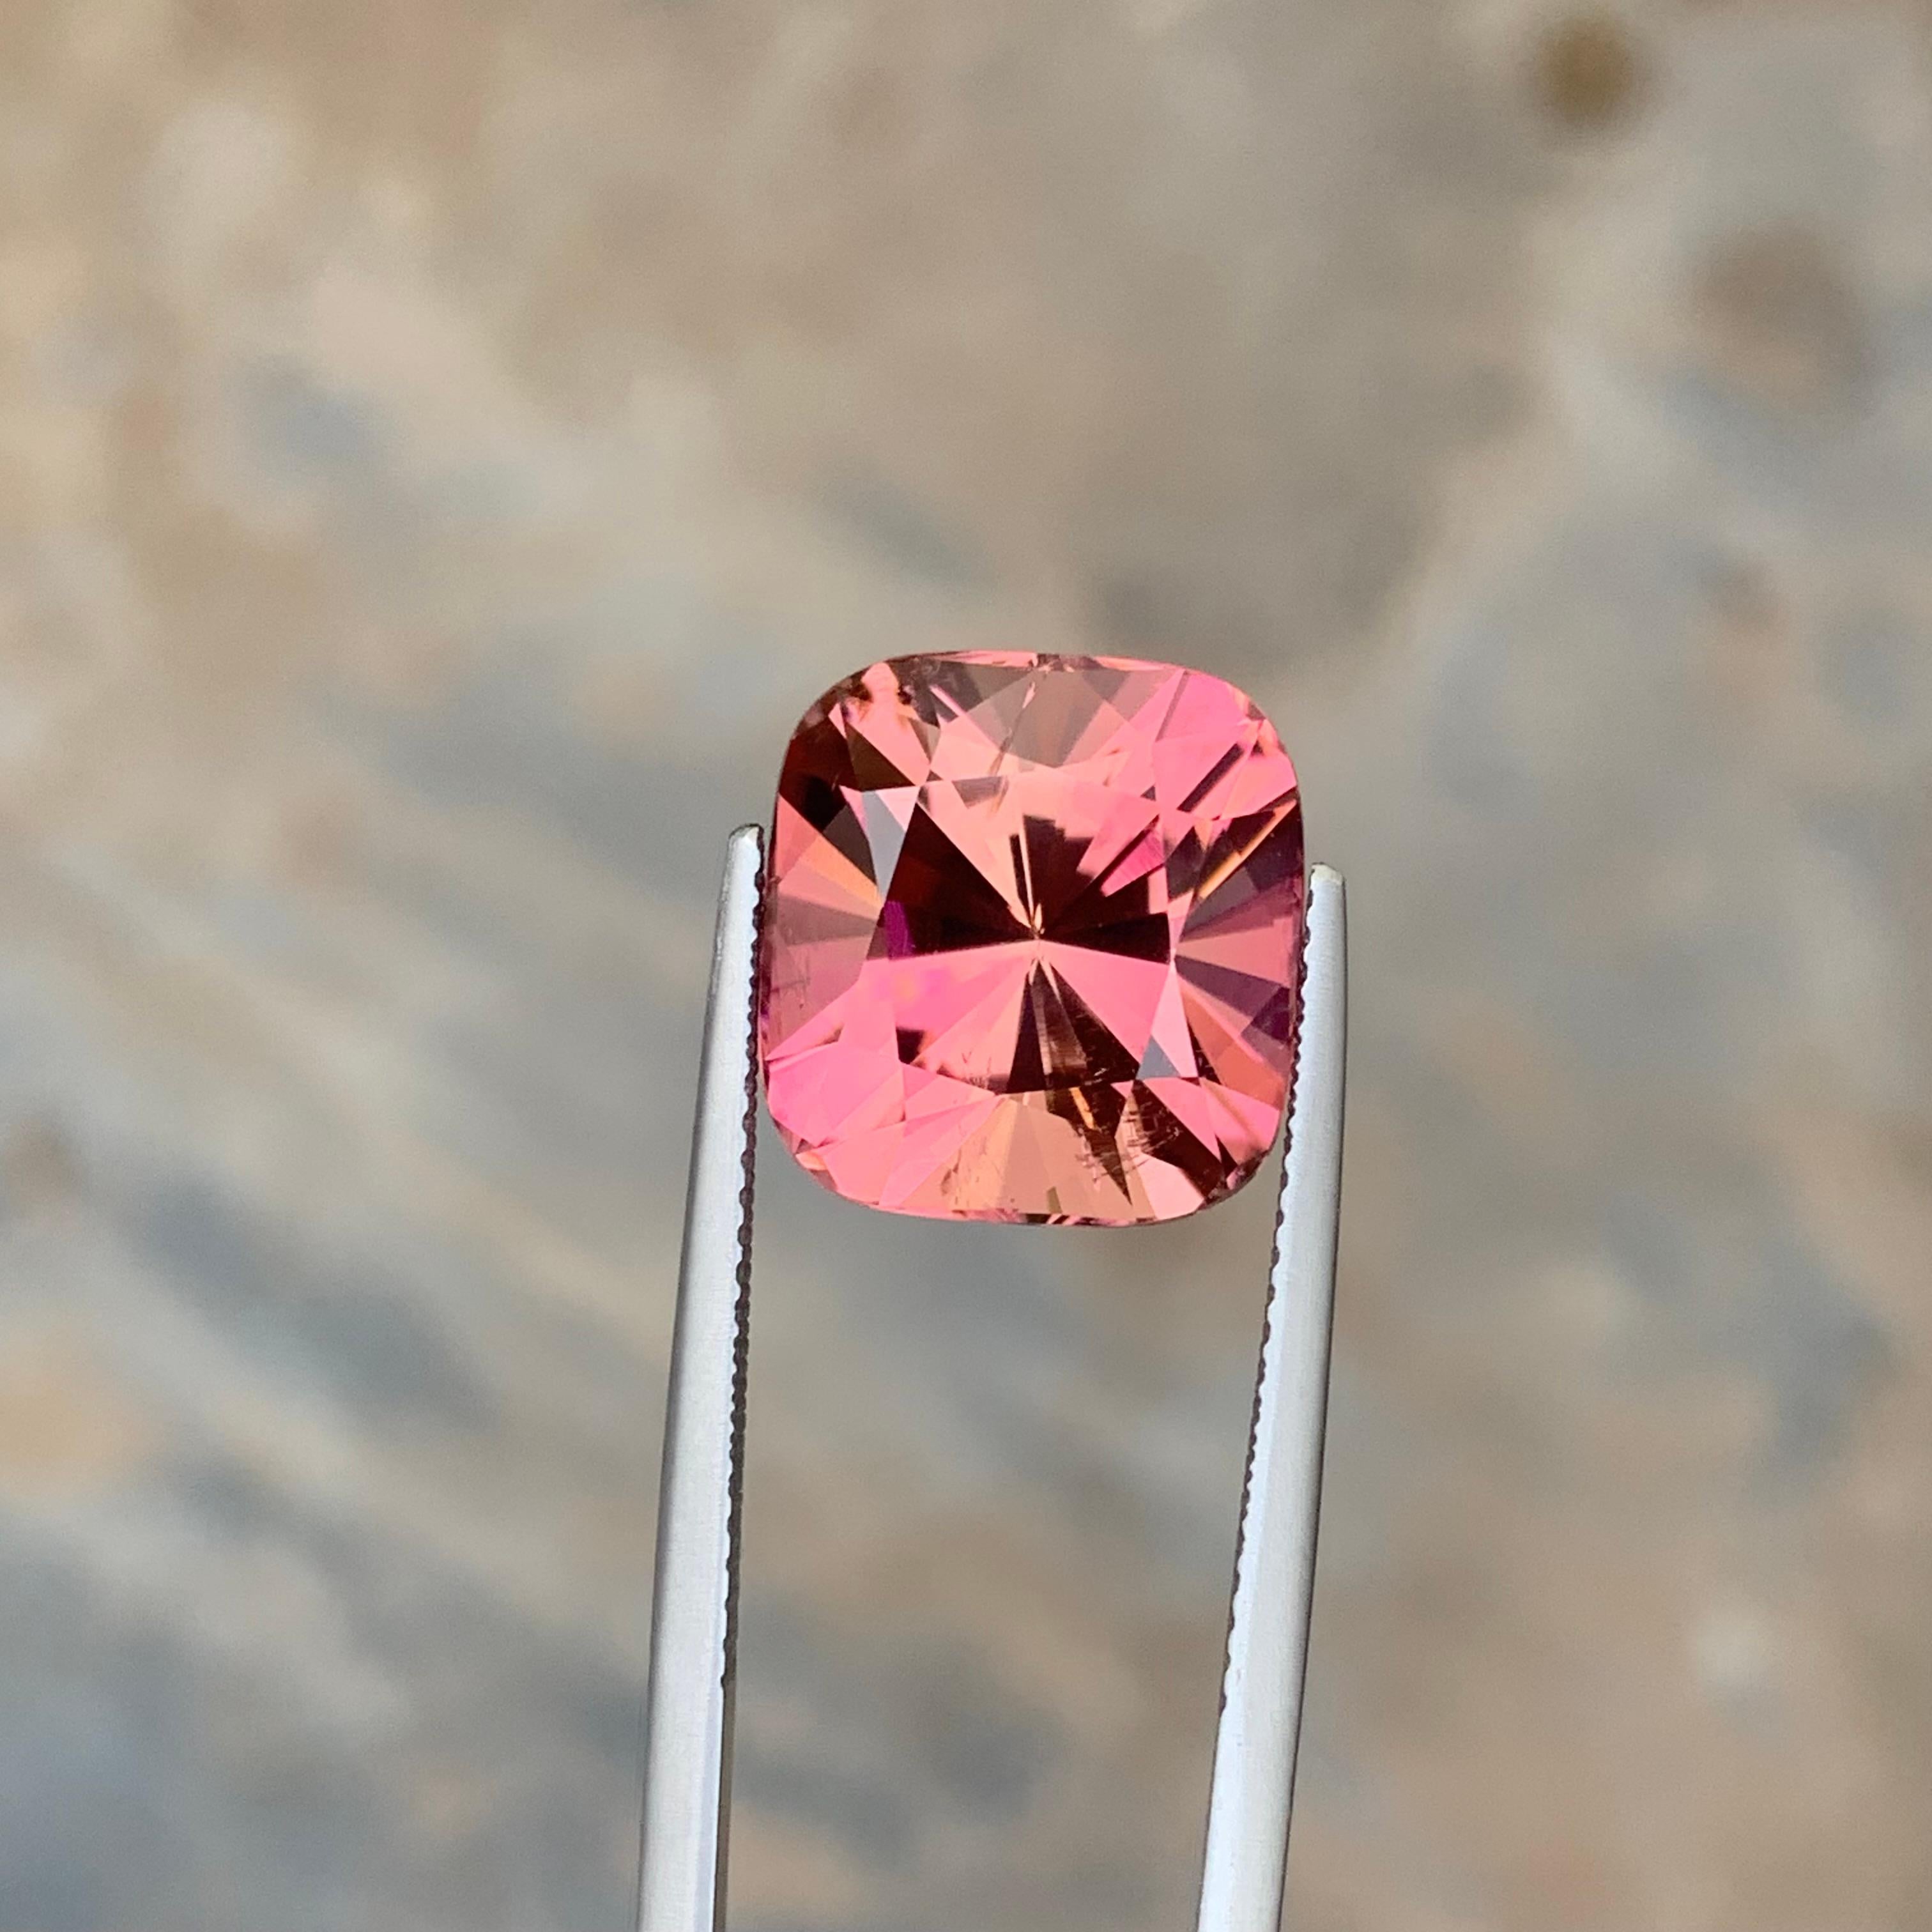 11.55 Carat Natural Loose Fancy Cut Pink Tourmaline Gemstone From Kunar Mine For Sale 2